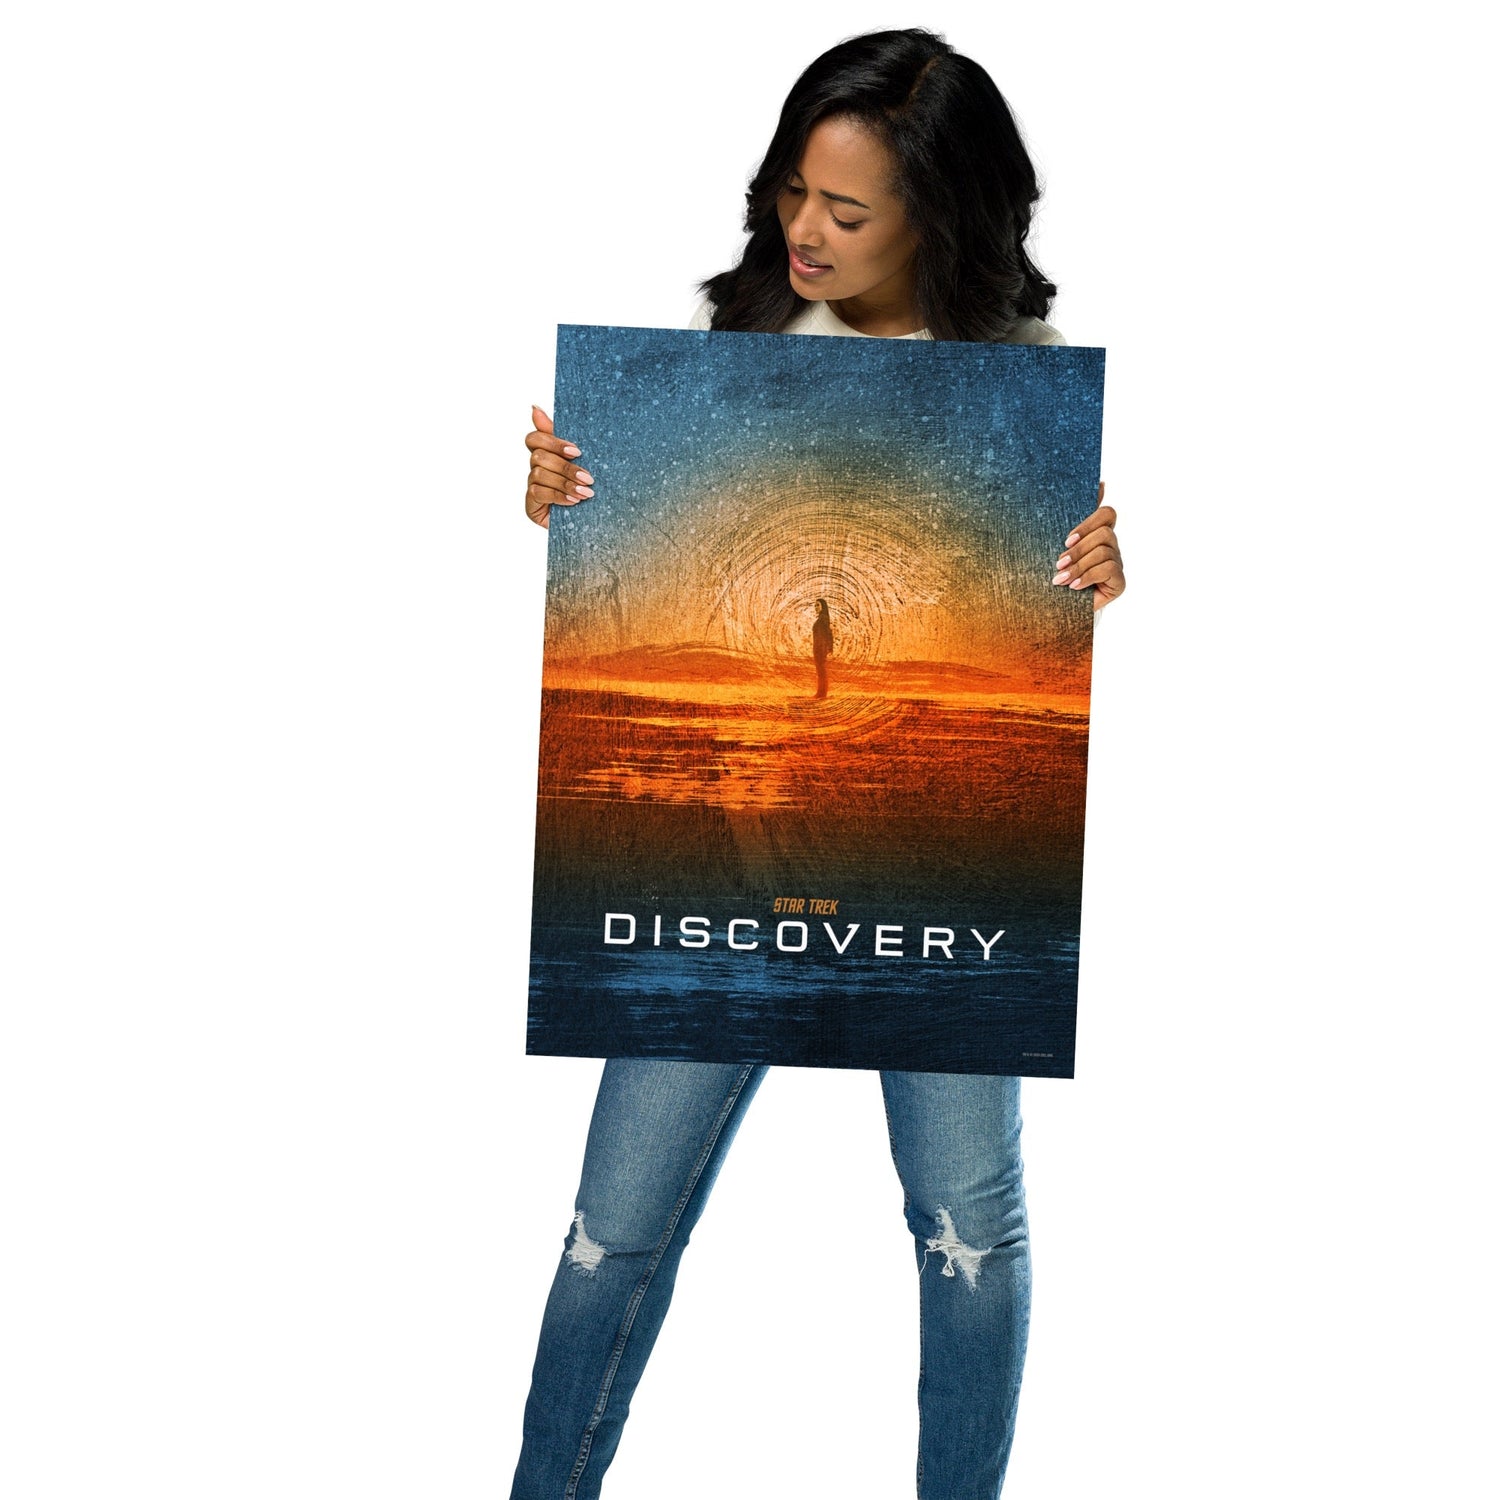 Star Trek: Discovery Sunset Premium Luster Poster - Paramount Shop